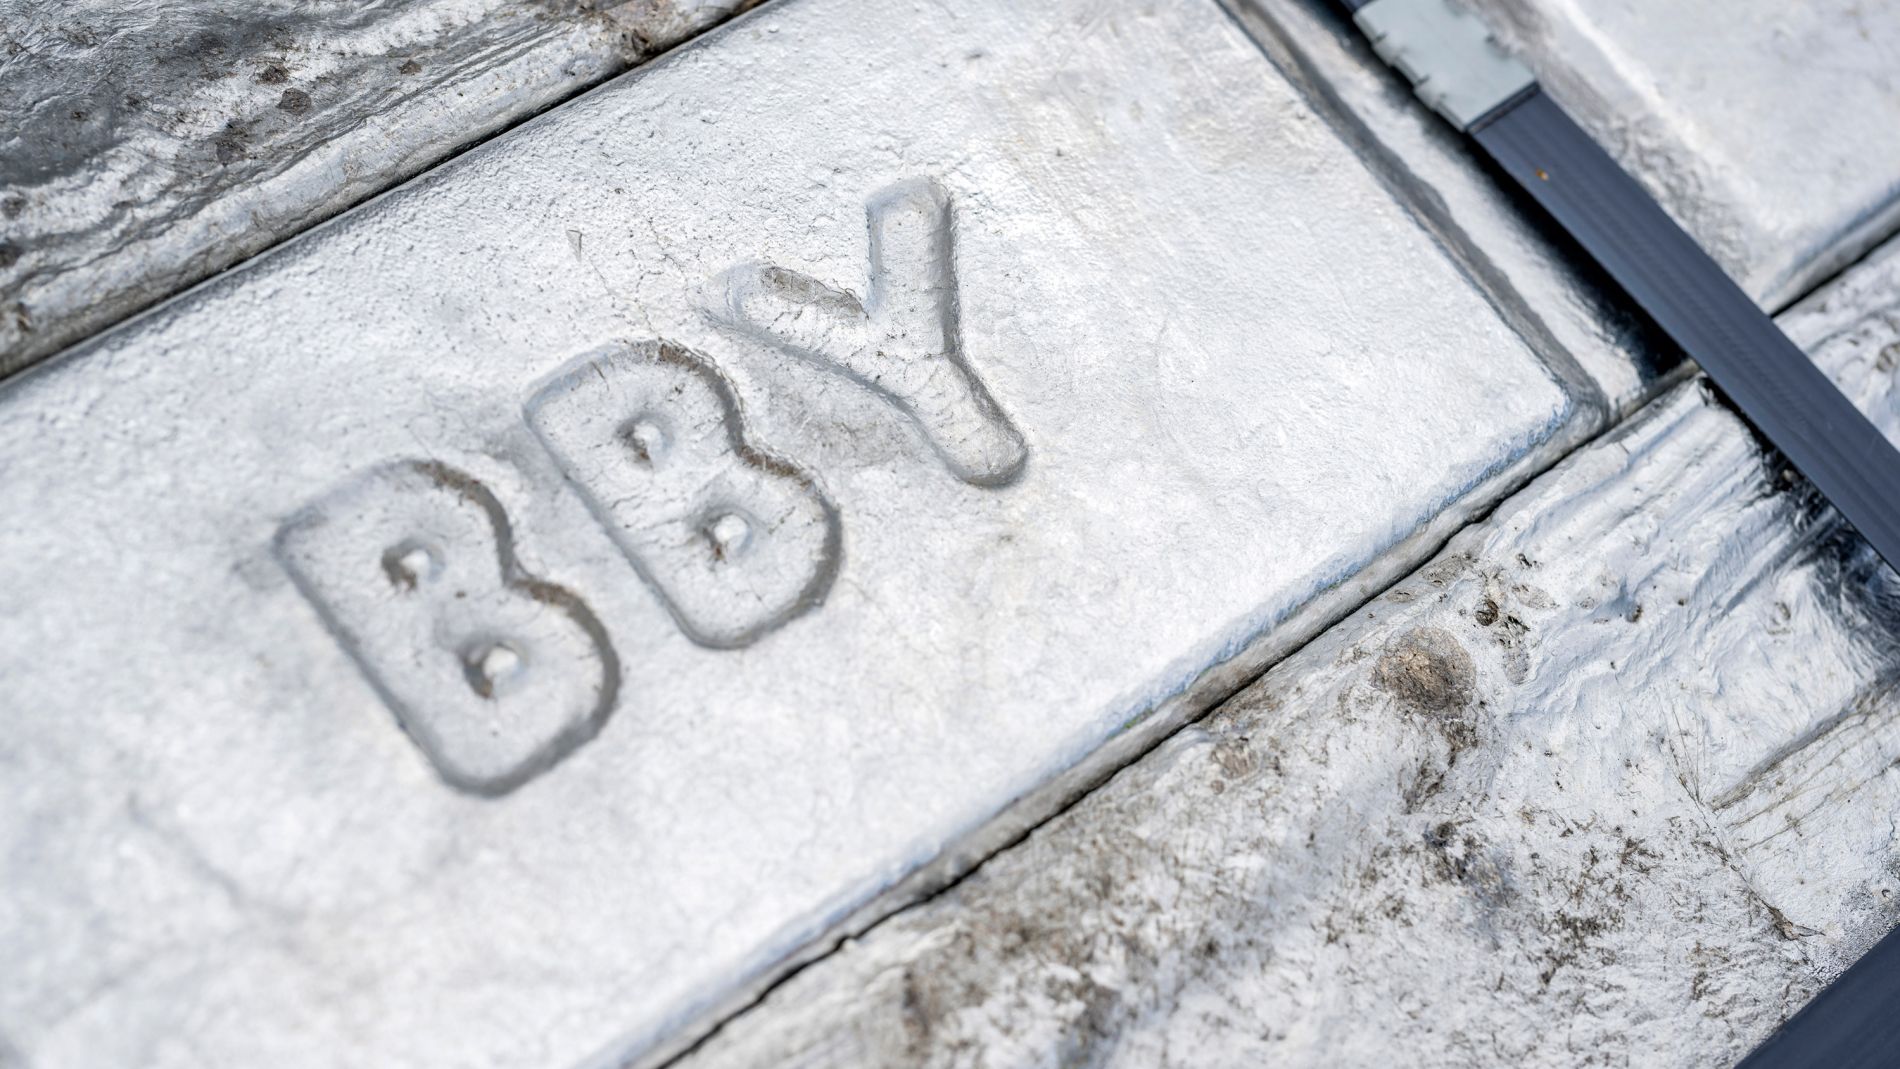 BBY branded Aluminium